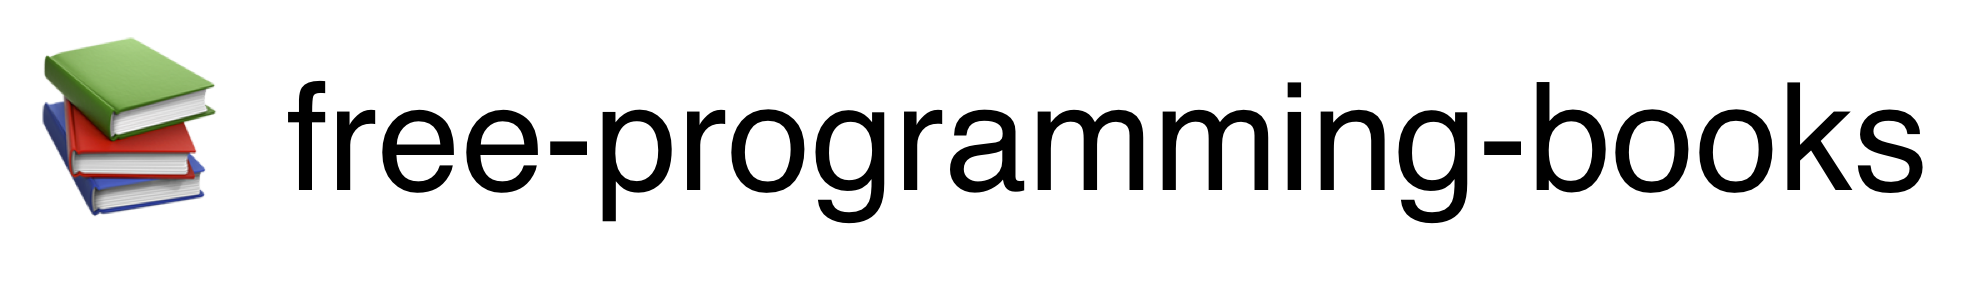 free-programming-books logo